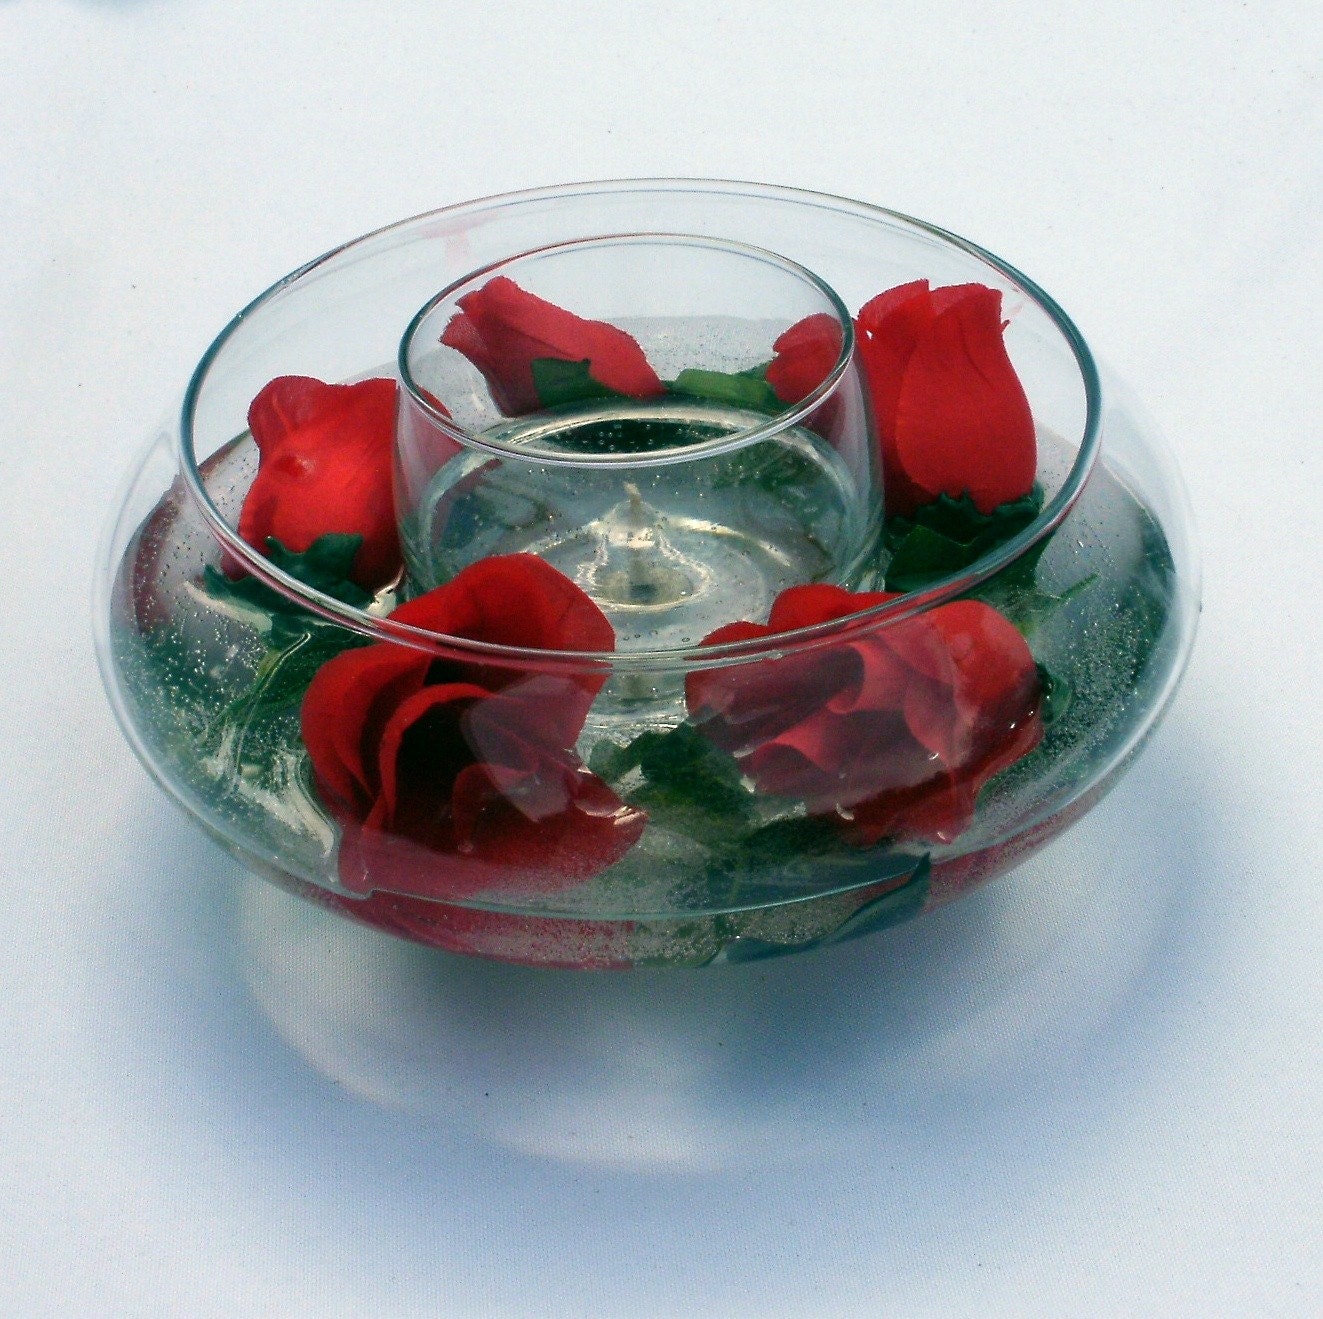 Wedding Centerpiece Red Rose Gel Candle by Silk N Lights Designs